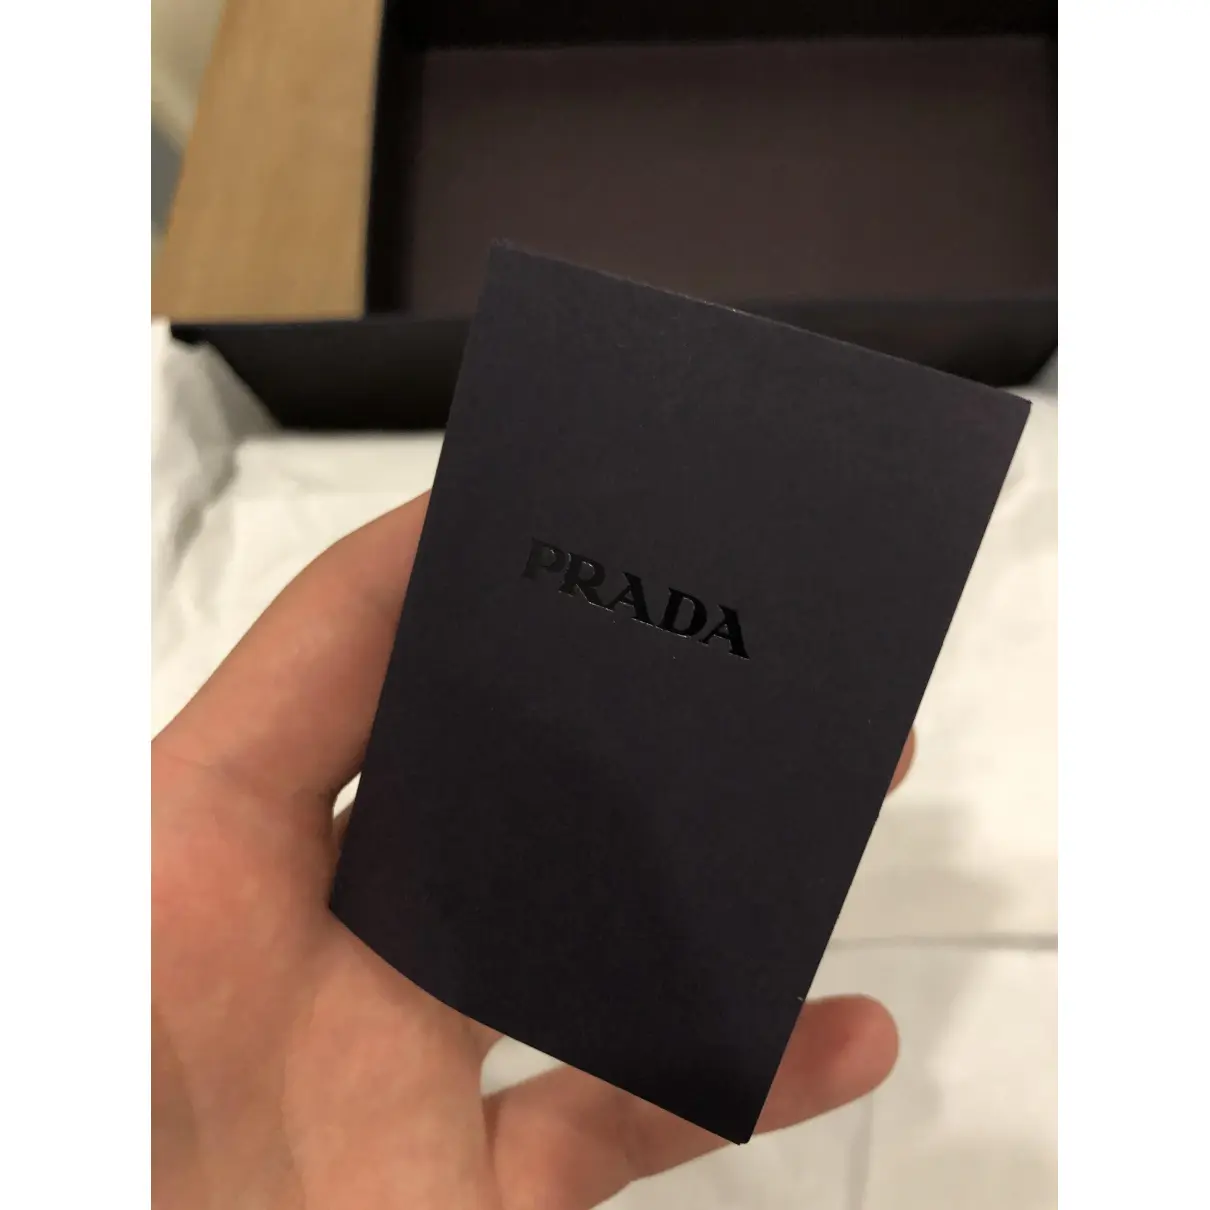 Buy Prada Leather low trainers online